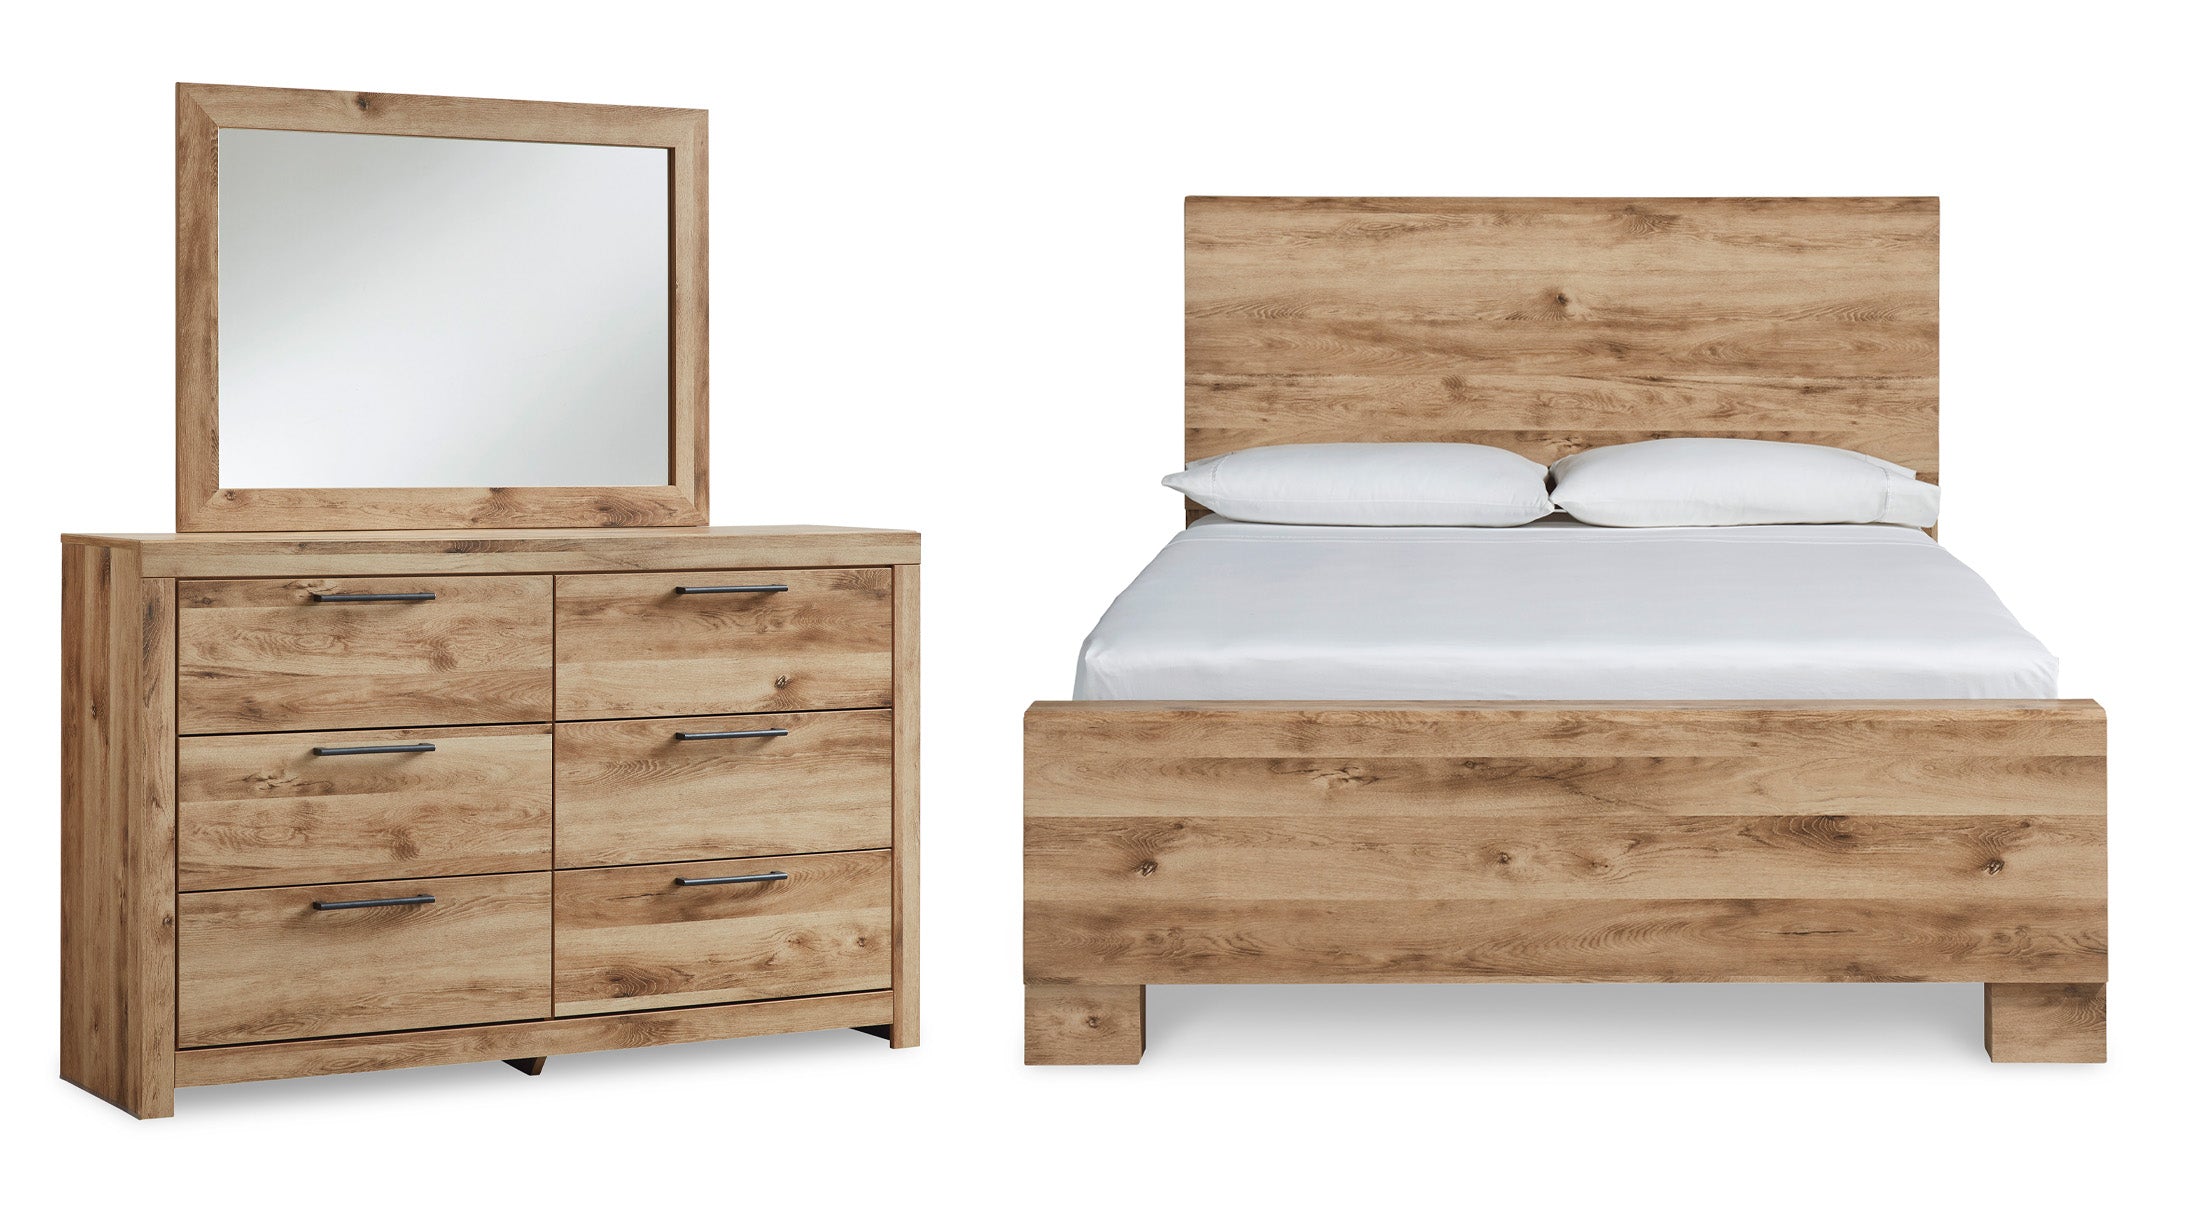 Hyanna Queen Panel Bed with Mirrored Dresser